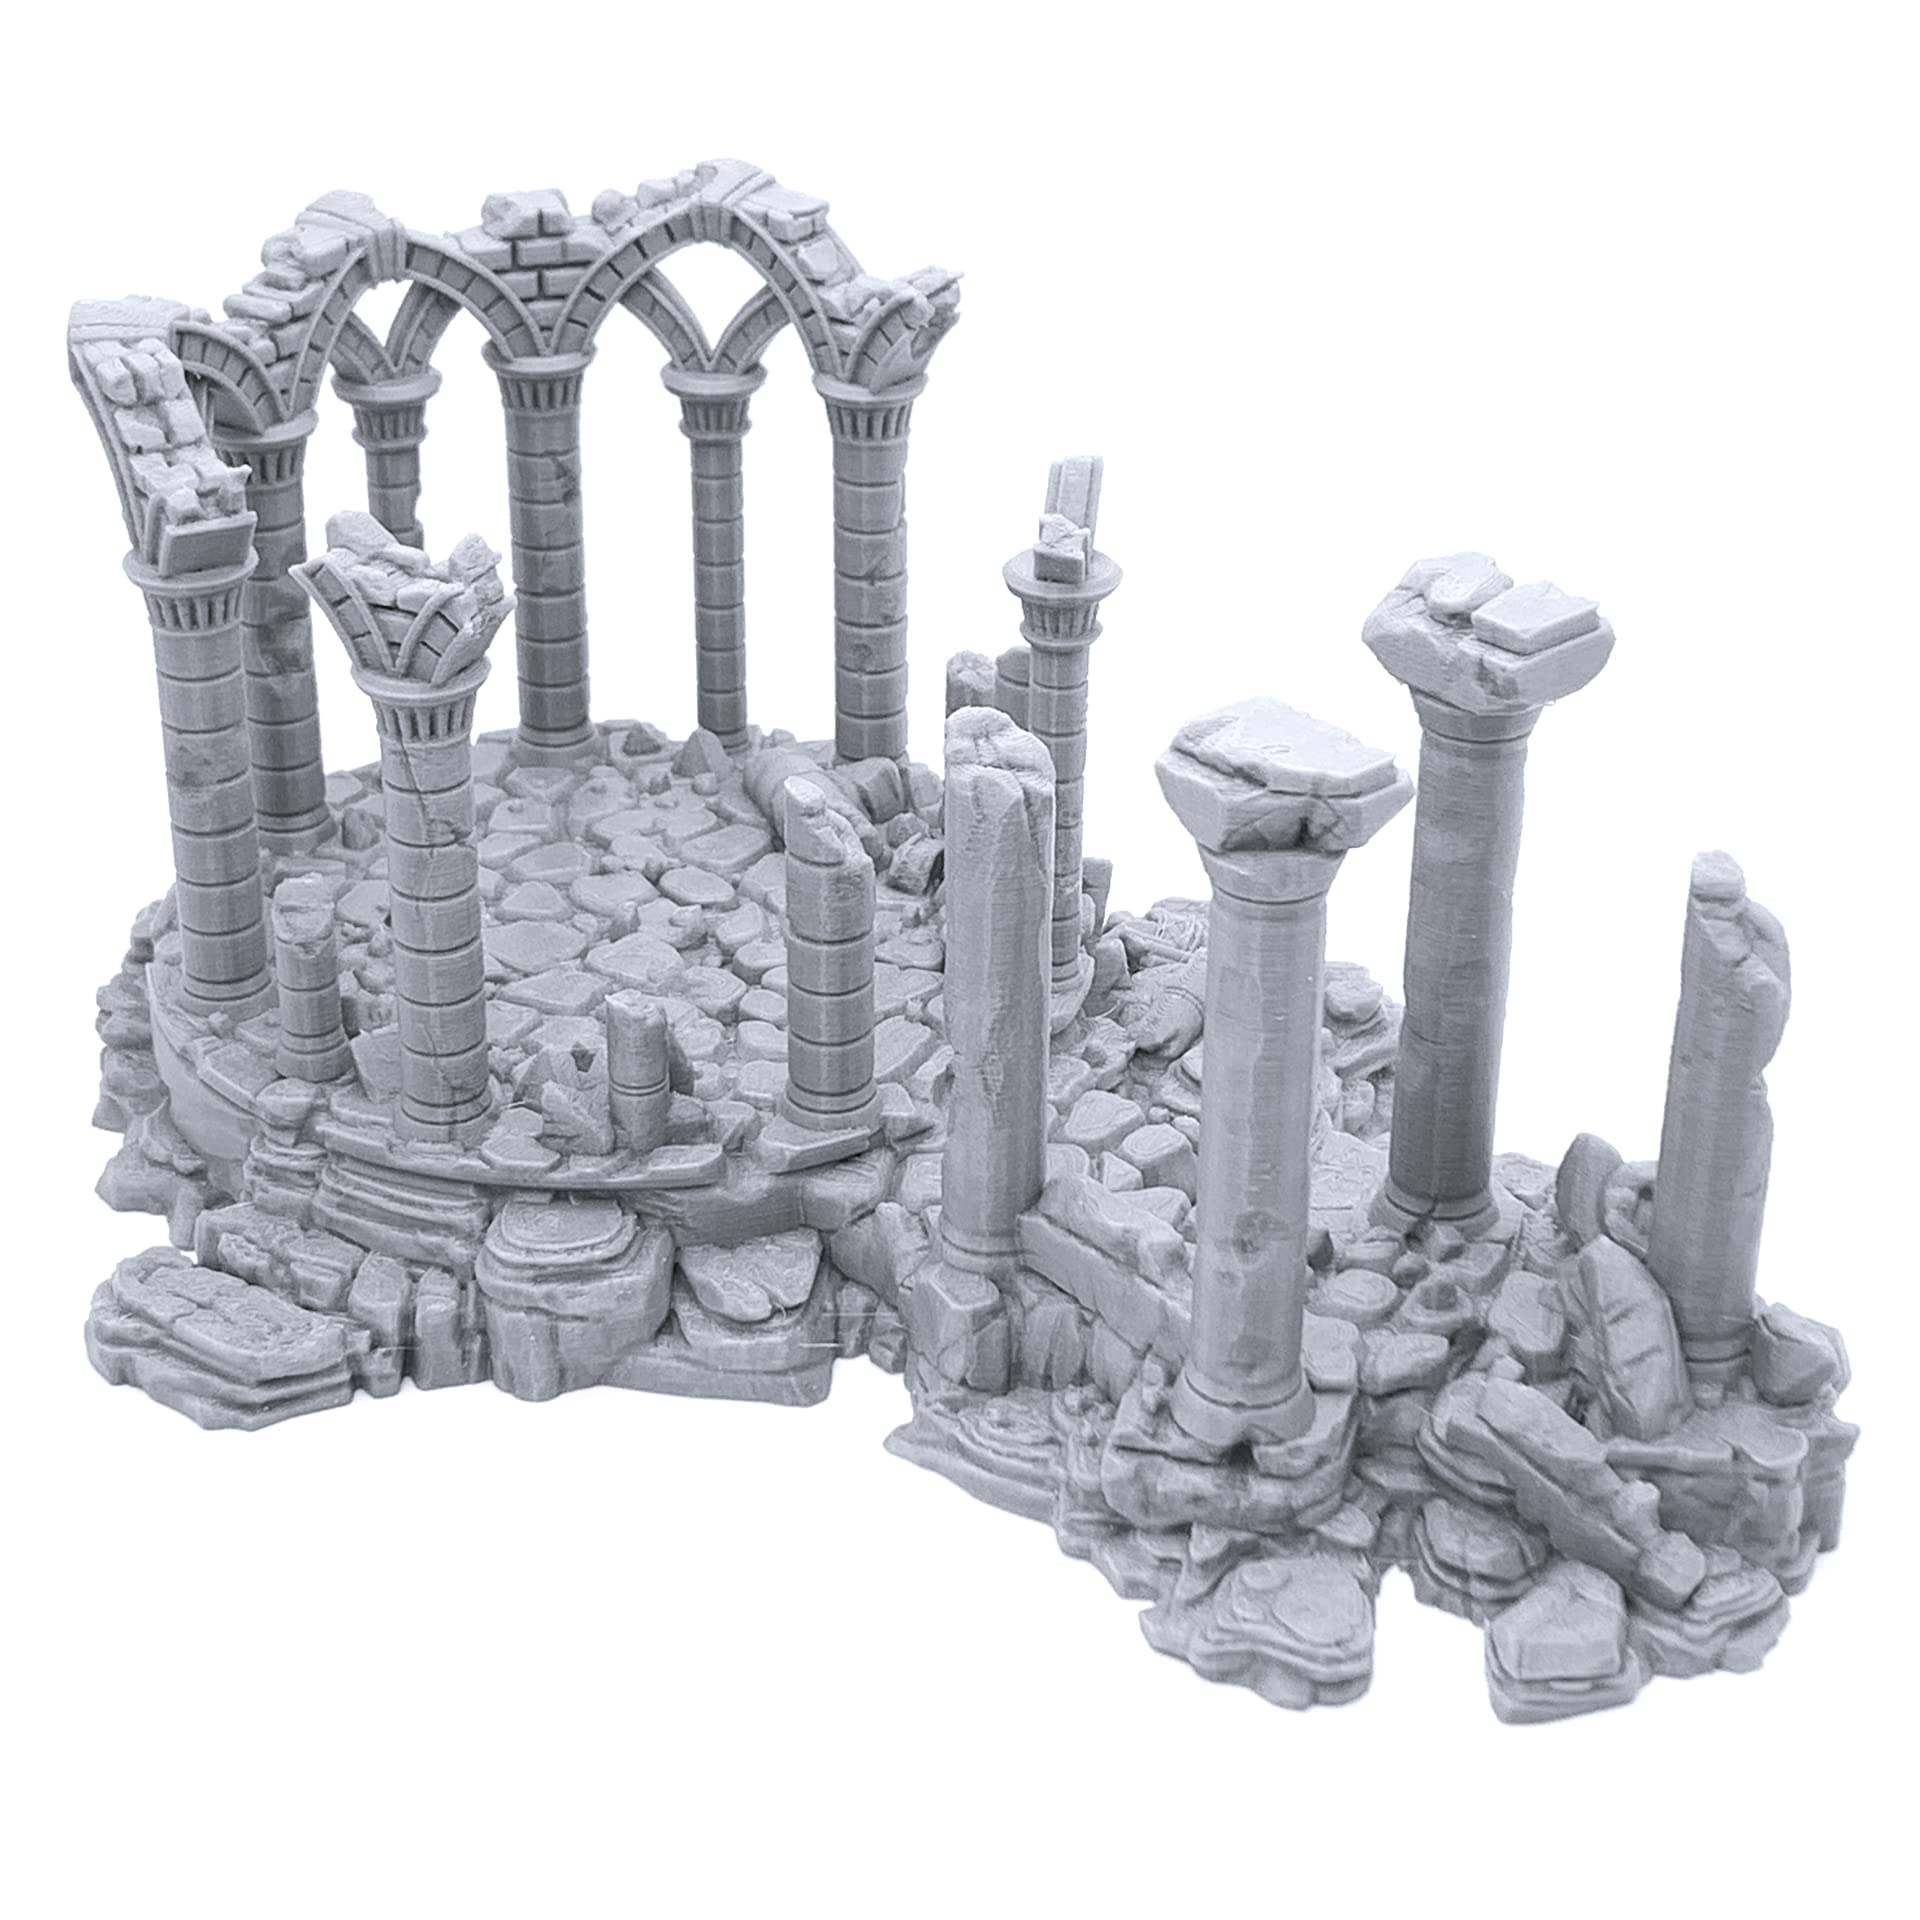 EnderToys Ancient Ruins by Printable Scenery, 3D Printed Tabletop RPG Scenery and Wargame Terrain 28mm Miniatures